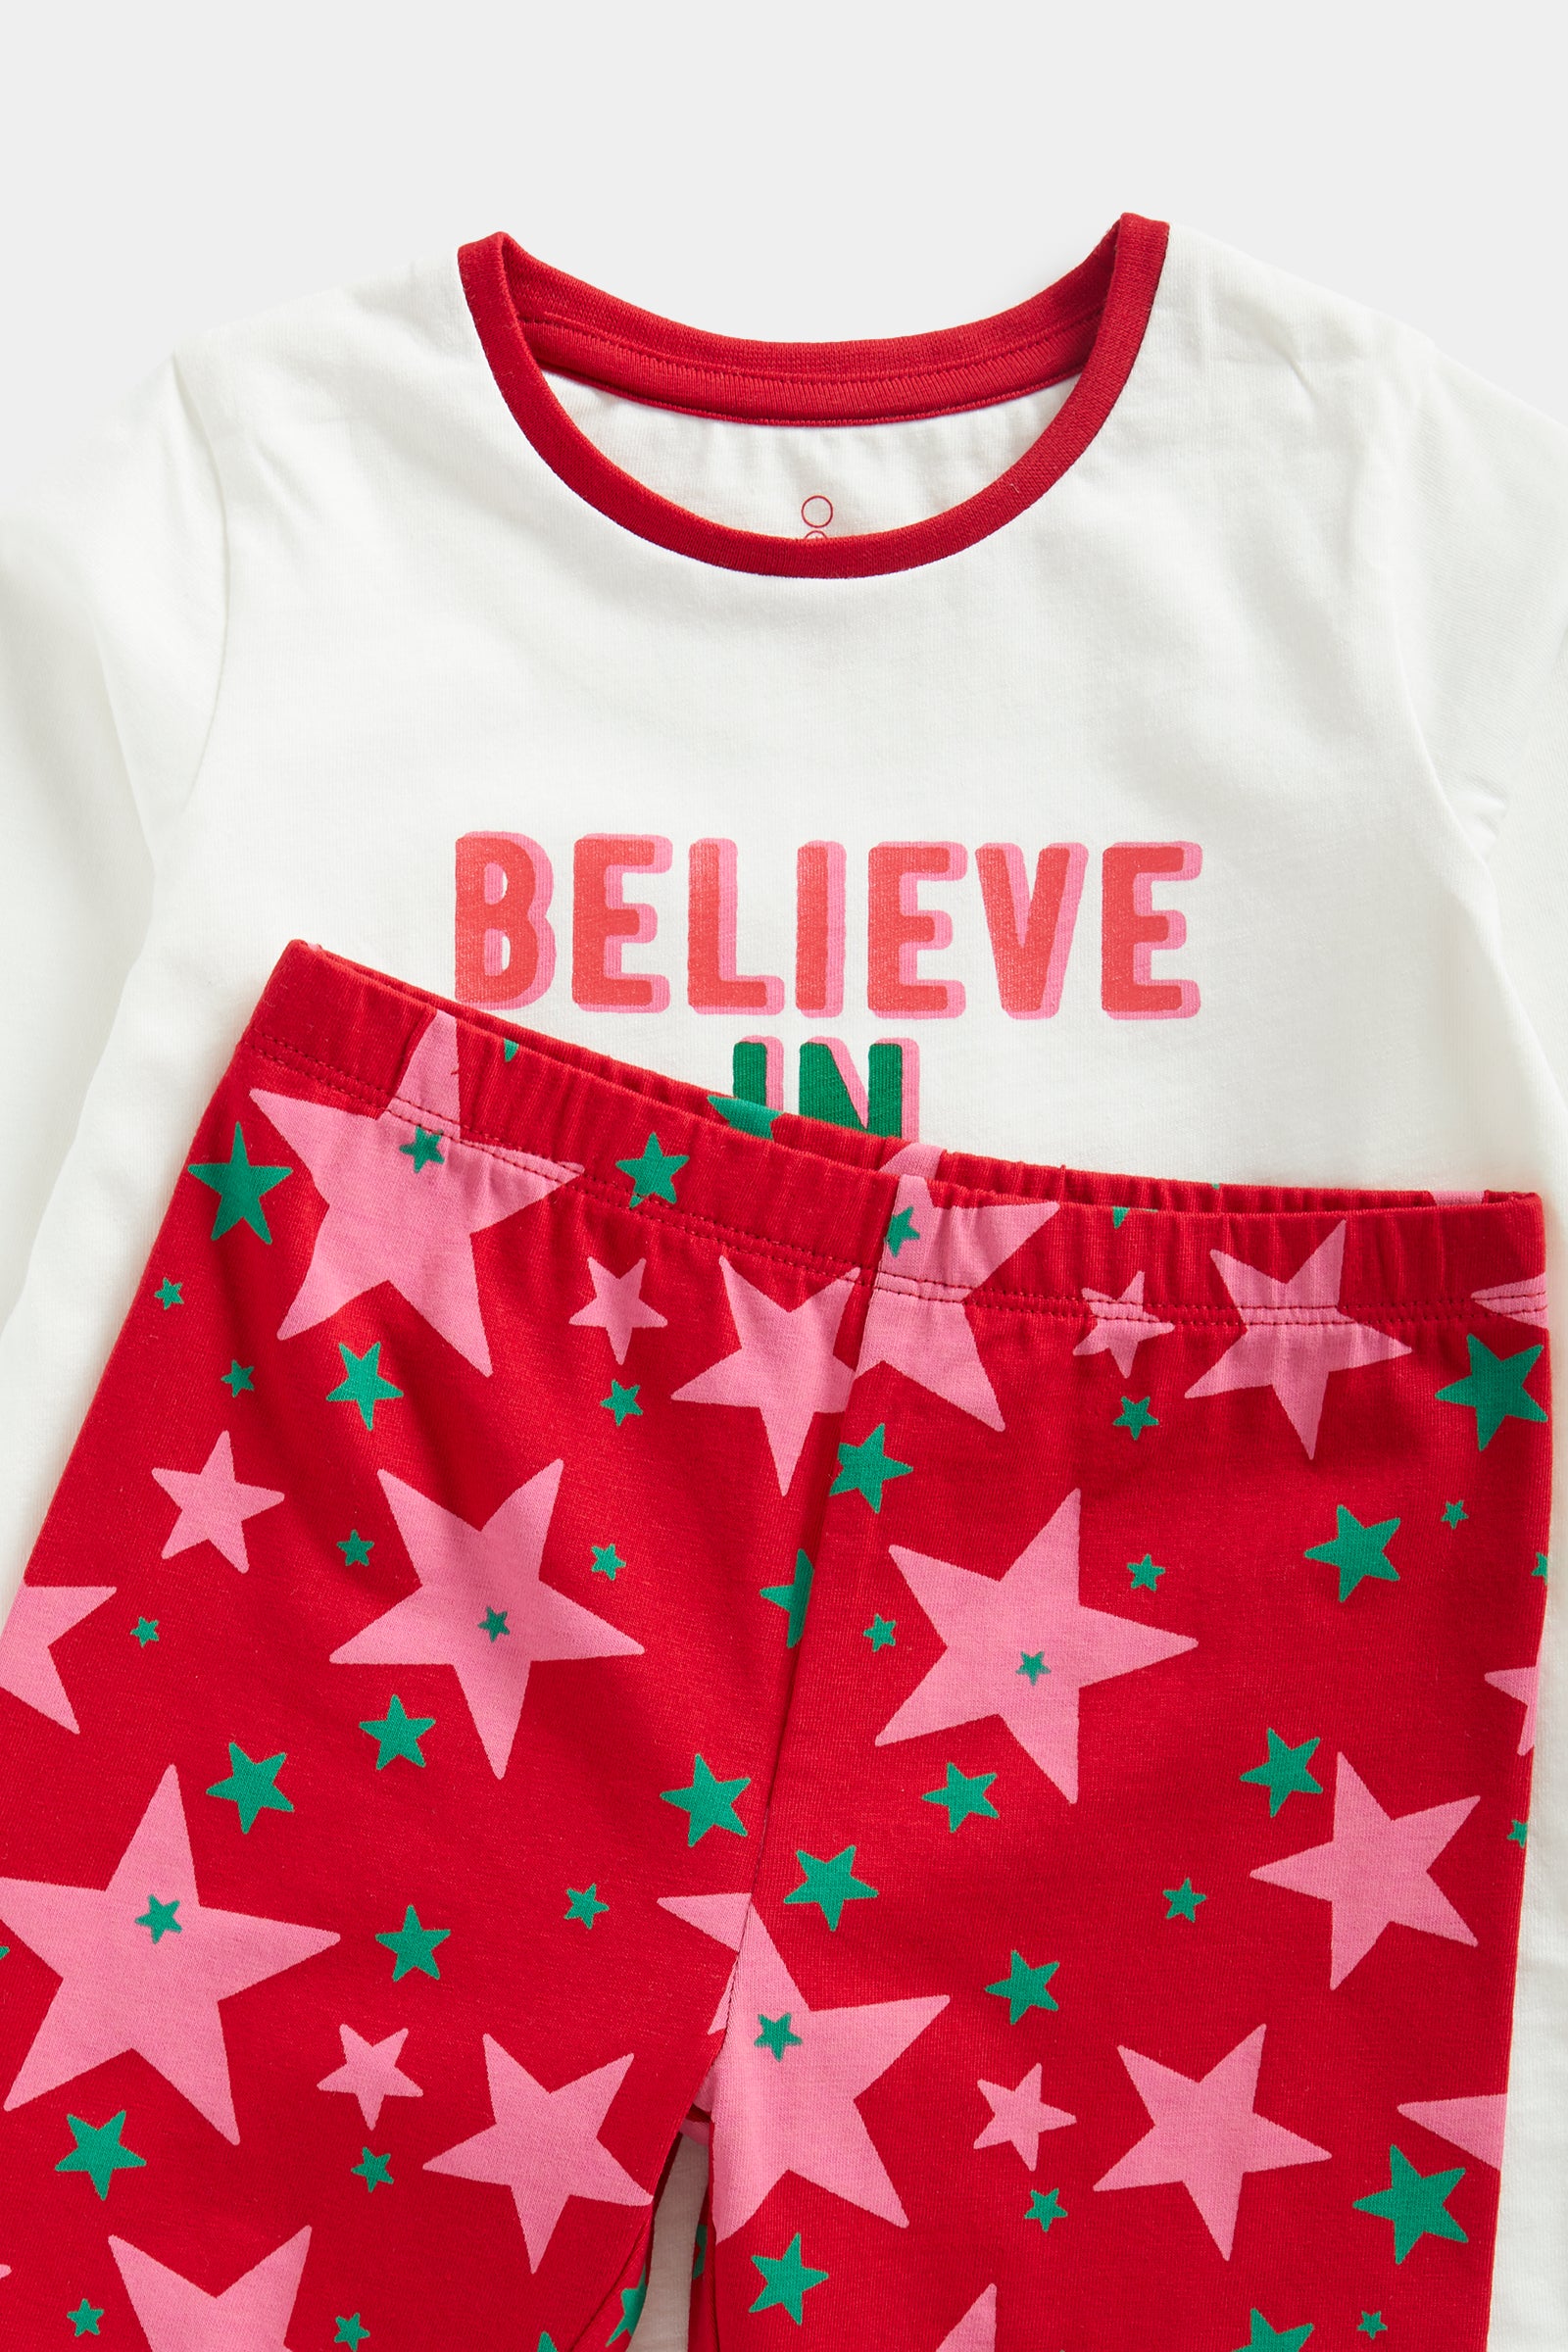 Mothercare Festive Elf Pyjamas